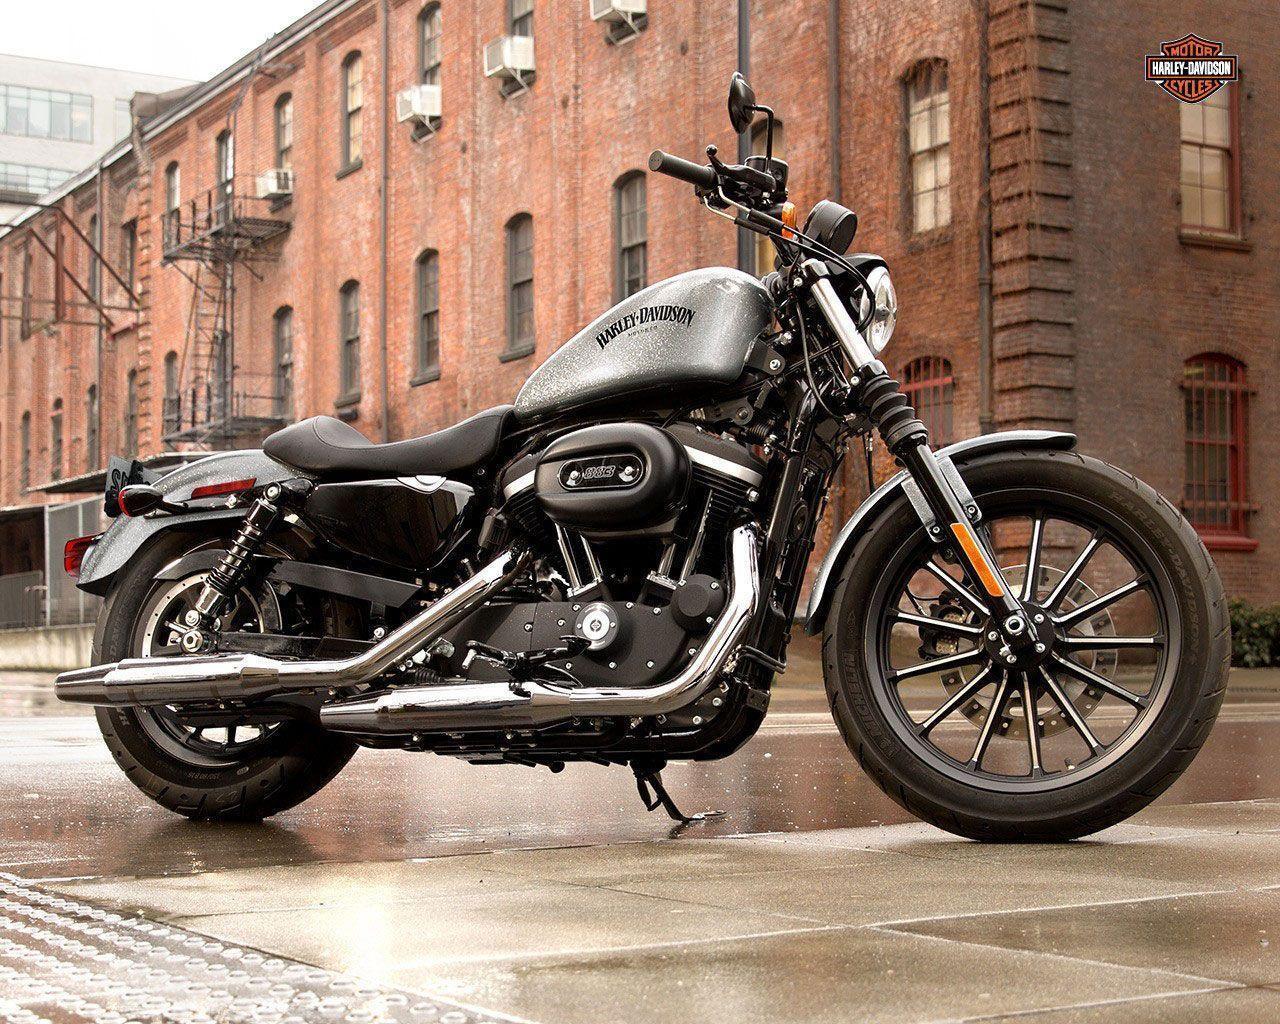 Harley Davidson XL883N Iron 883 Review